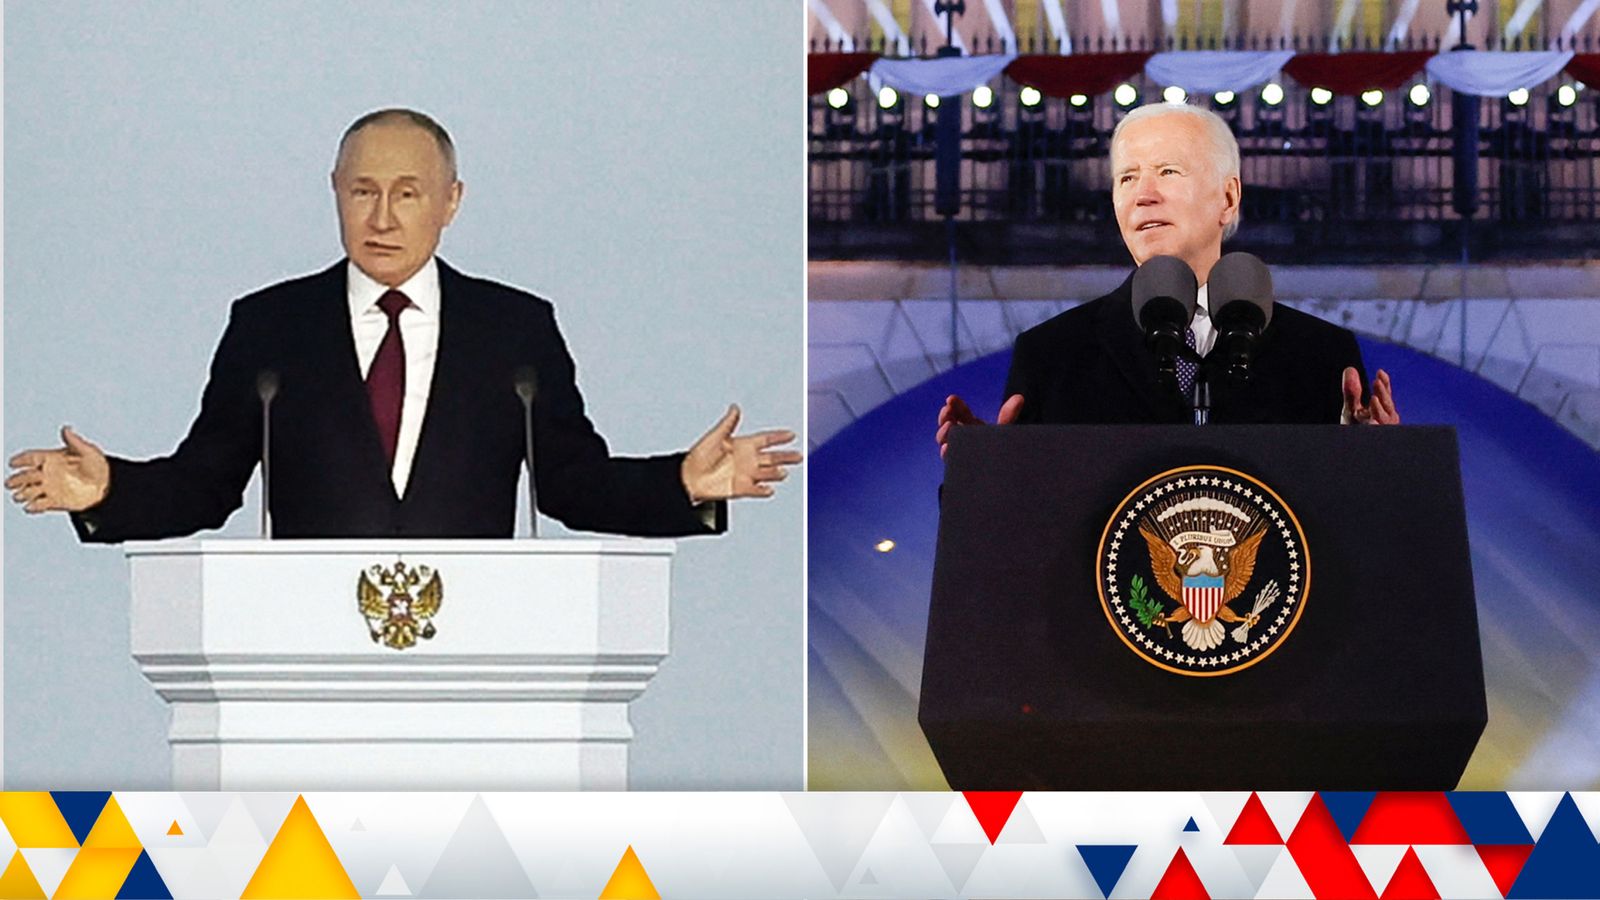 Ukraine war: Biden says Kyiv's allies have 'iron will' as Putin suspends key nuclear treaty